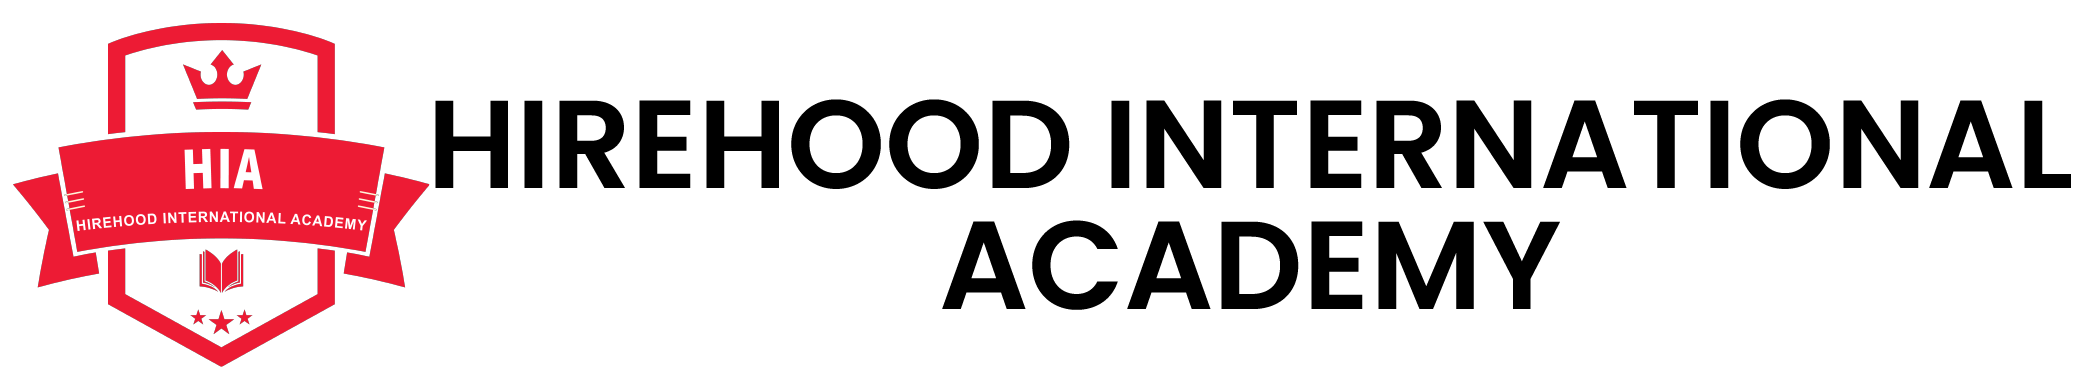 Hirehood International Academy - Logo